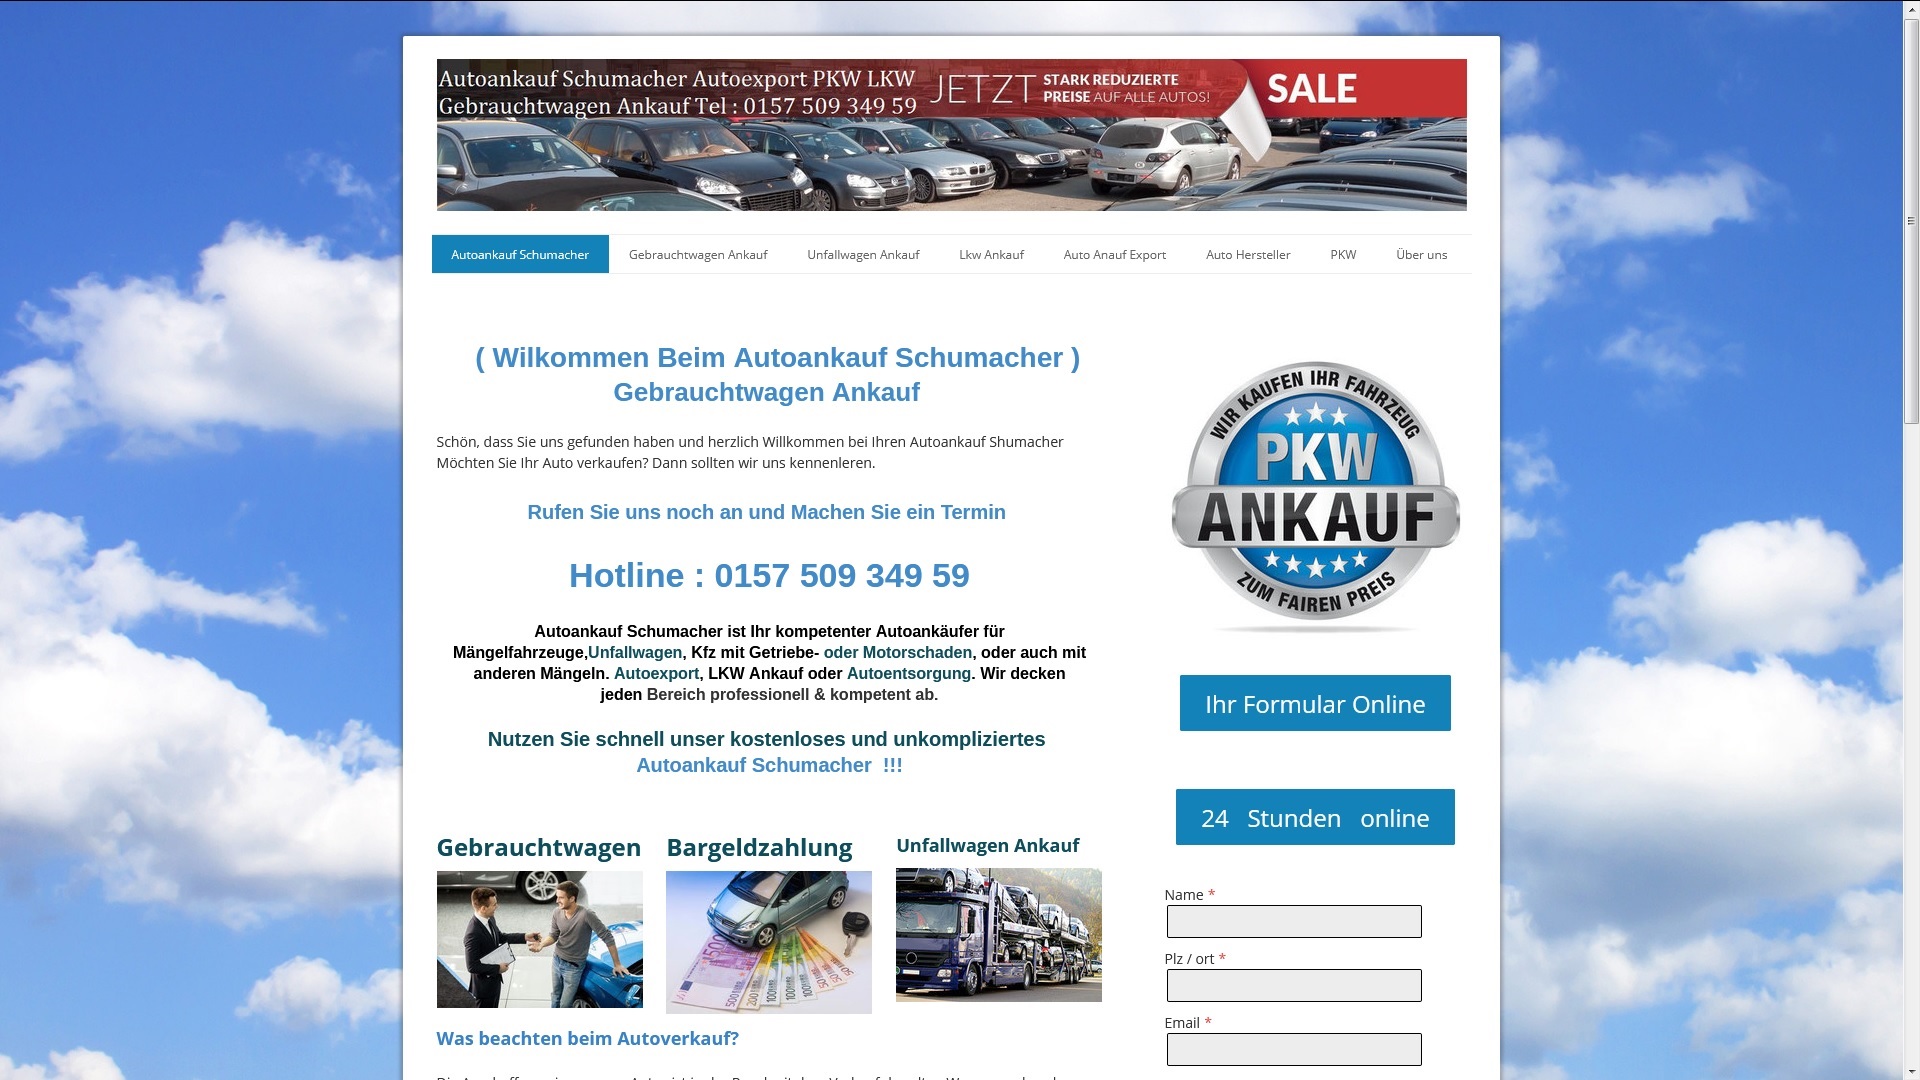 autoankauf oberhausen auto verkaufen in oberhausen zum hoechstpreis - Autoankauf Oberhausen -Auto verkaufen in Oberhausen zum Höchstpreis